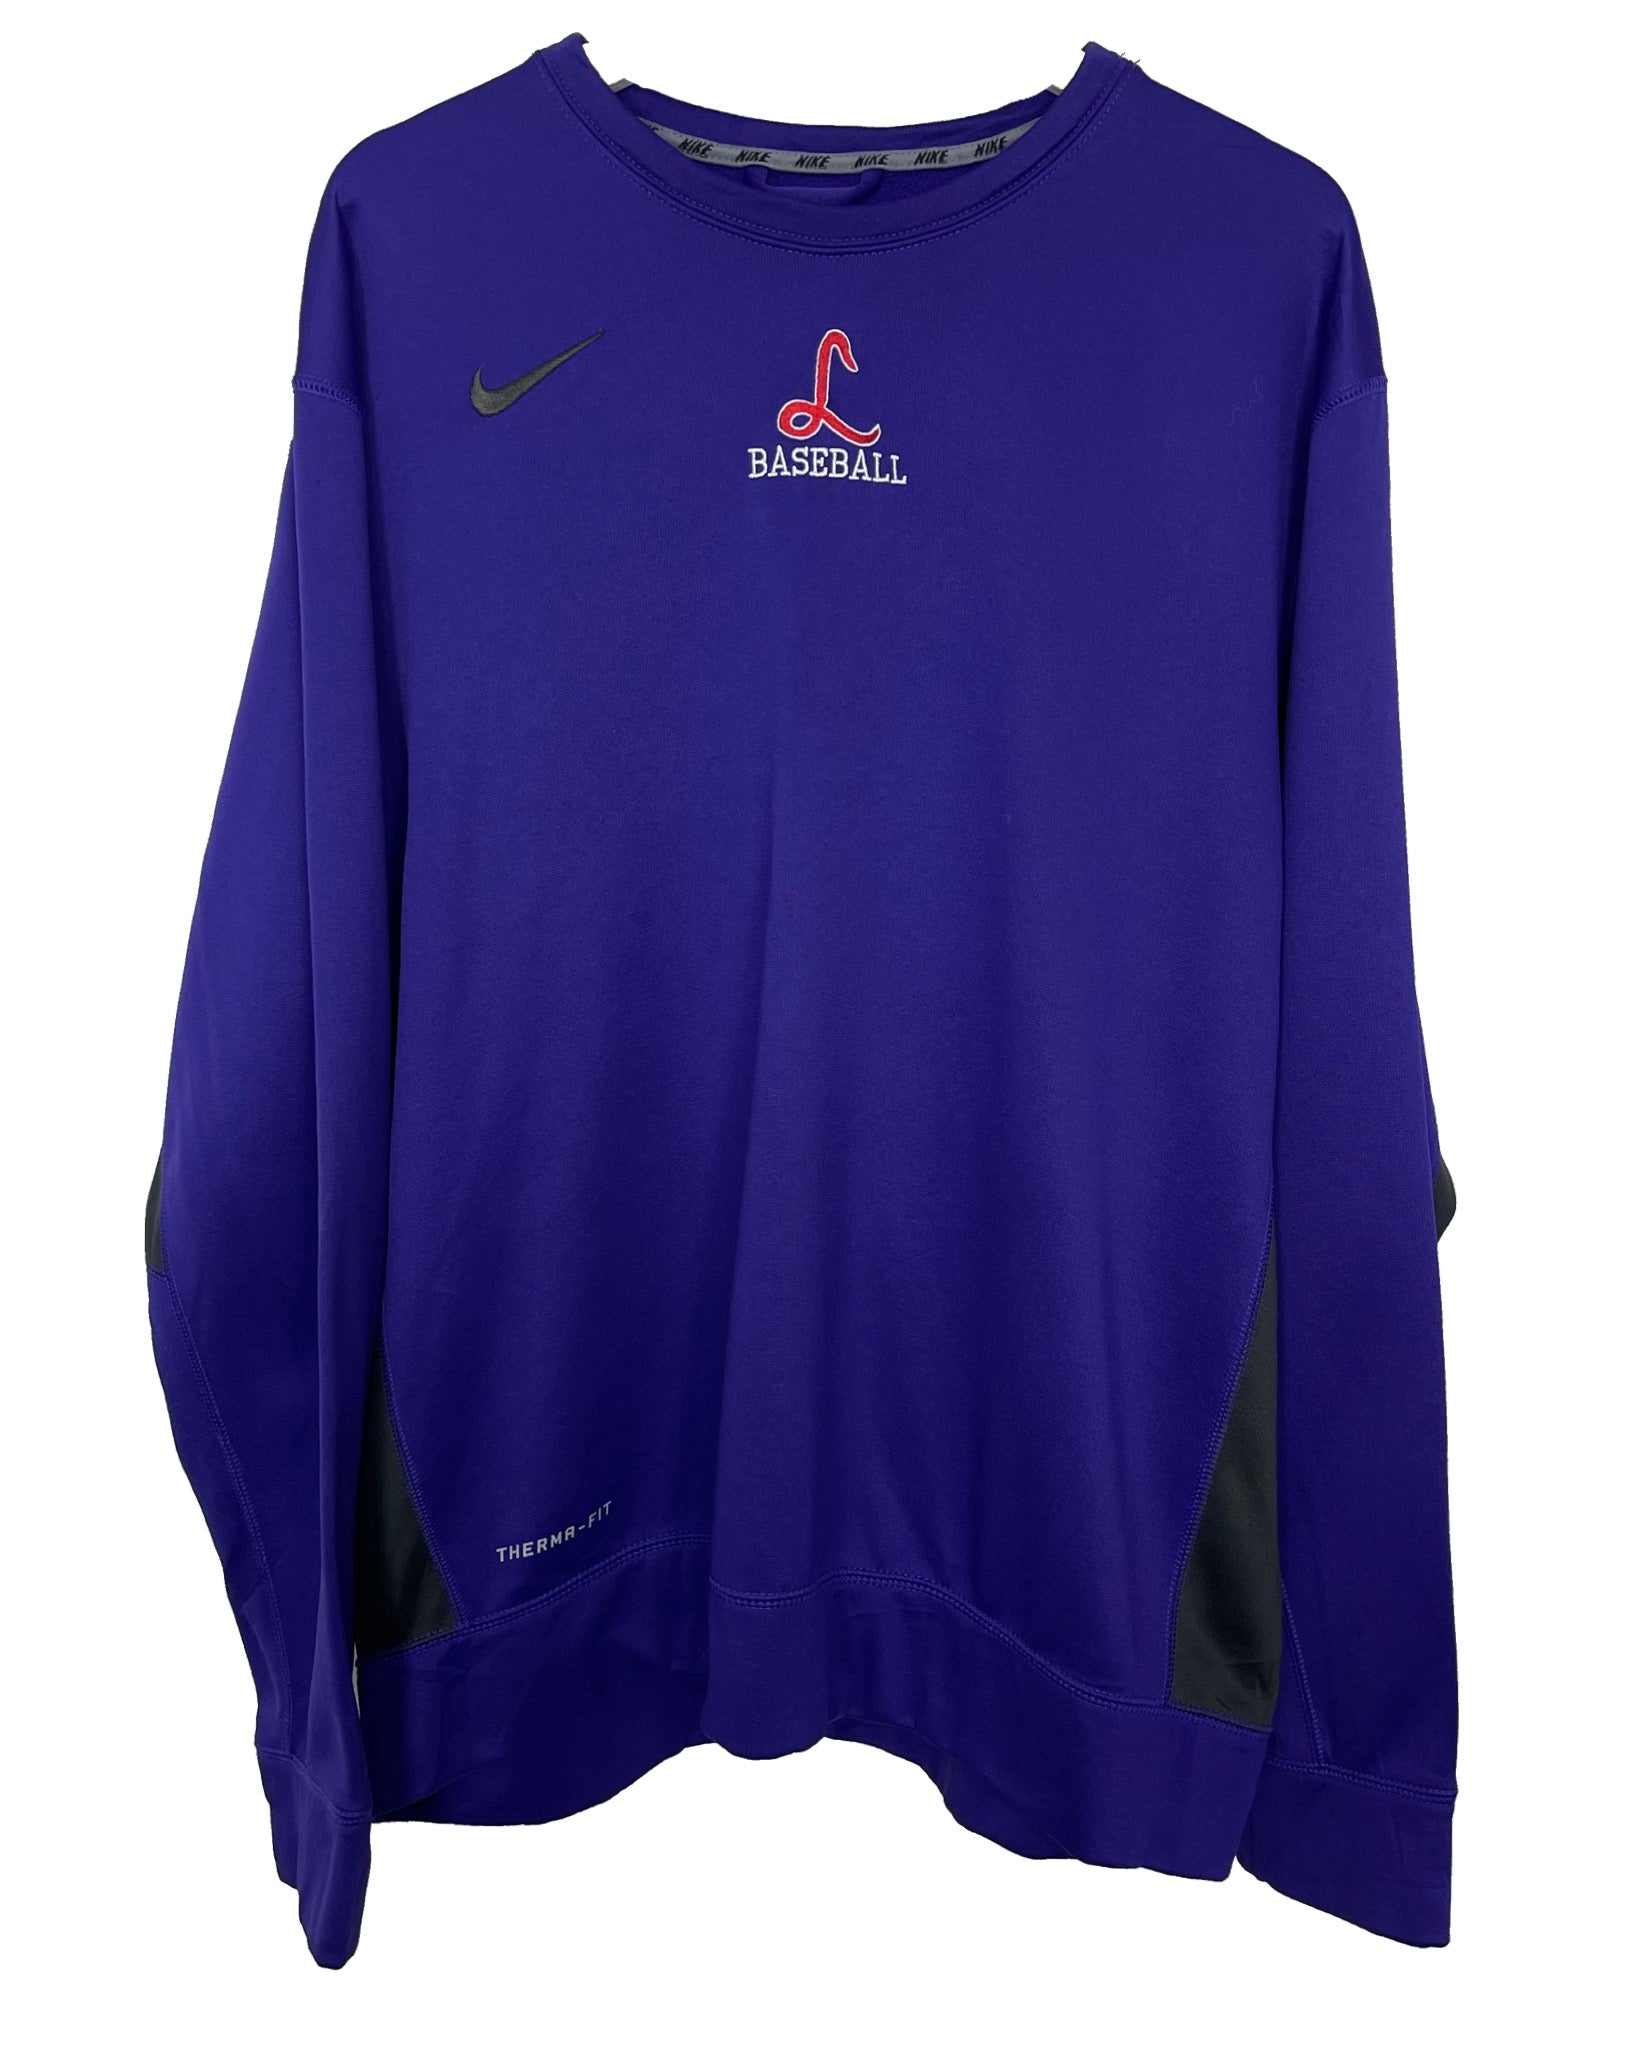  Sweatshirt Nike Sweat - XL - PLOMOSTORE